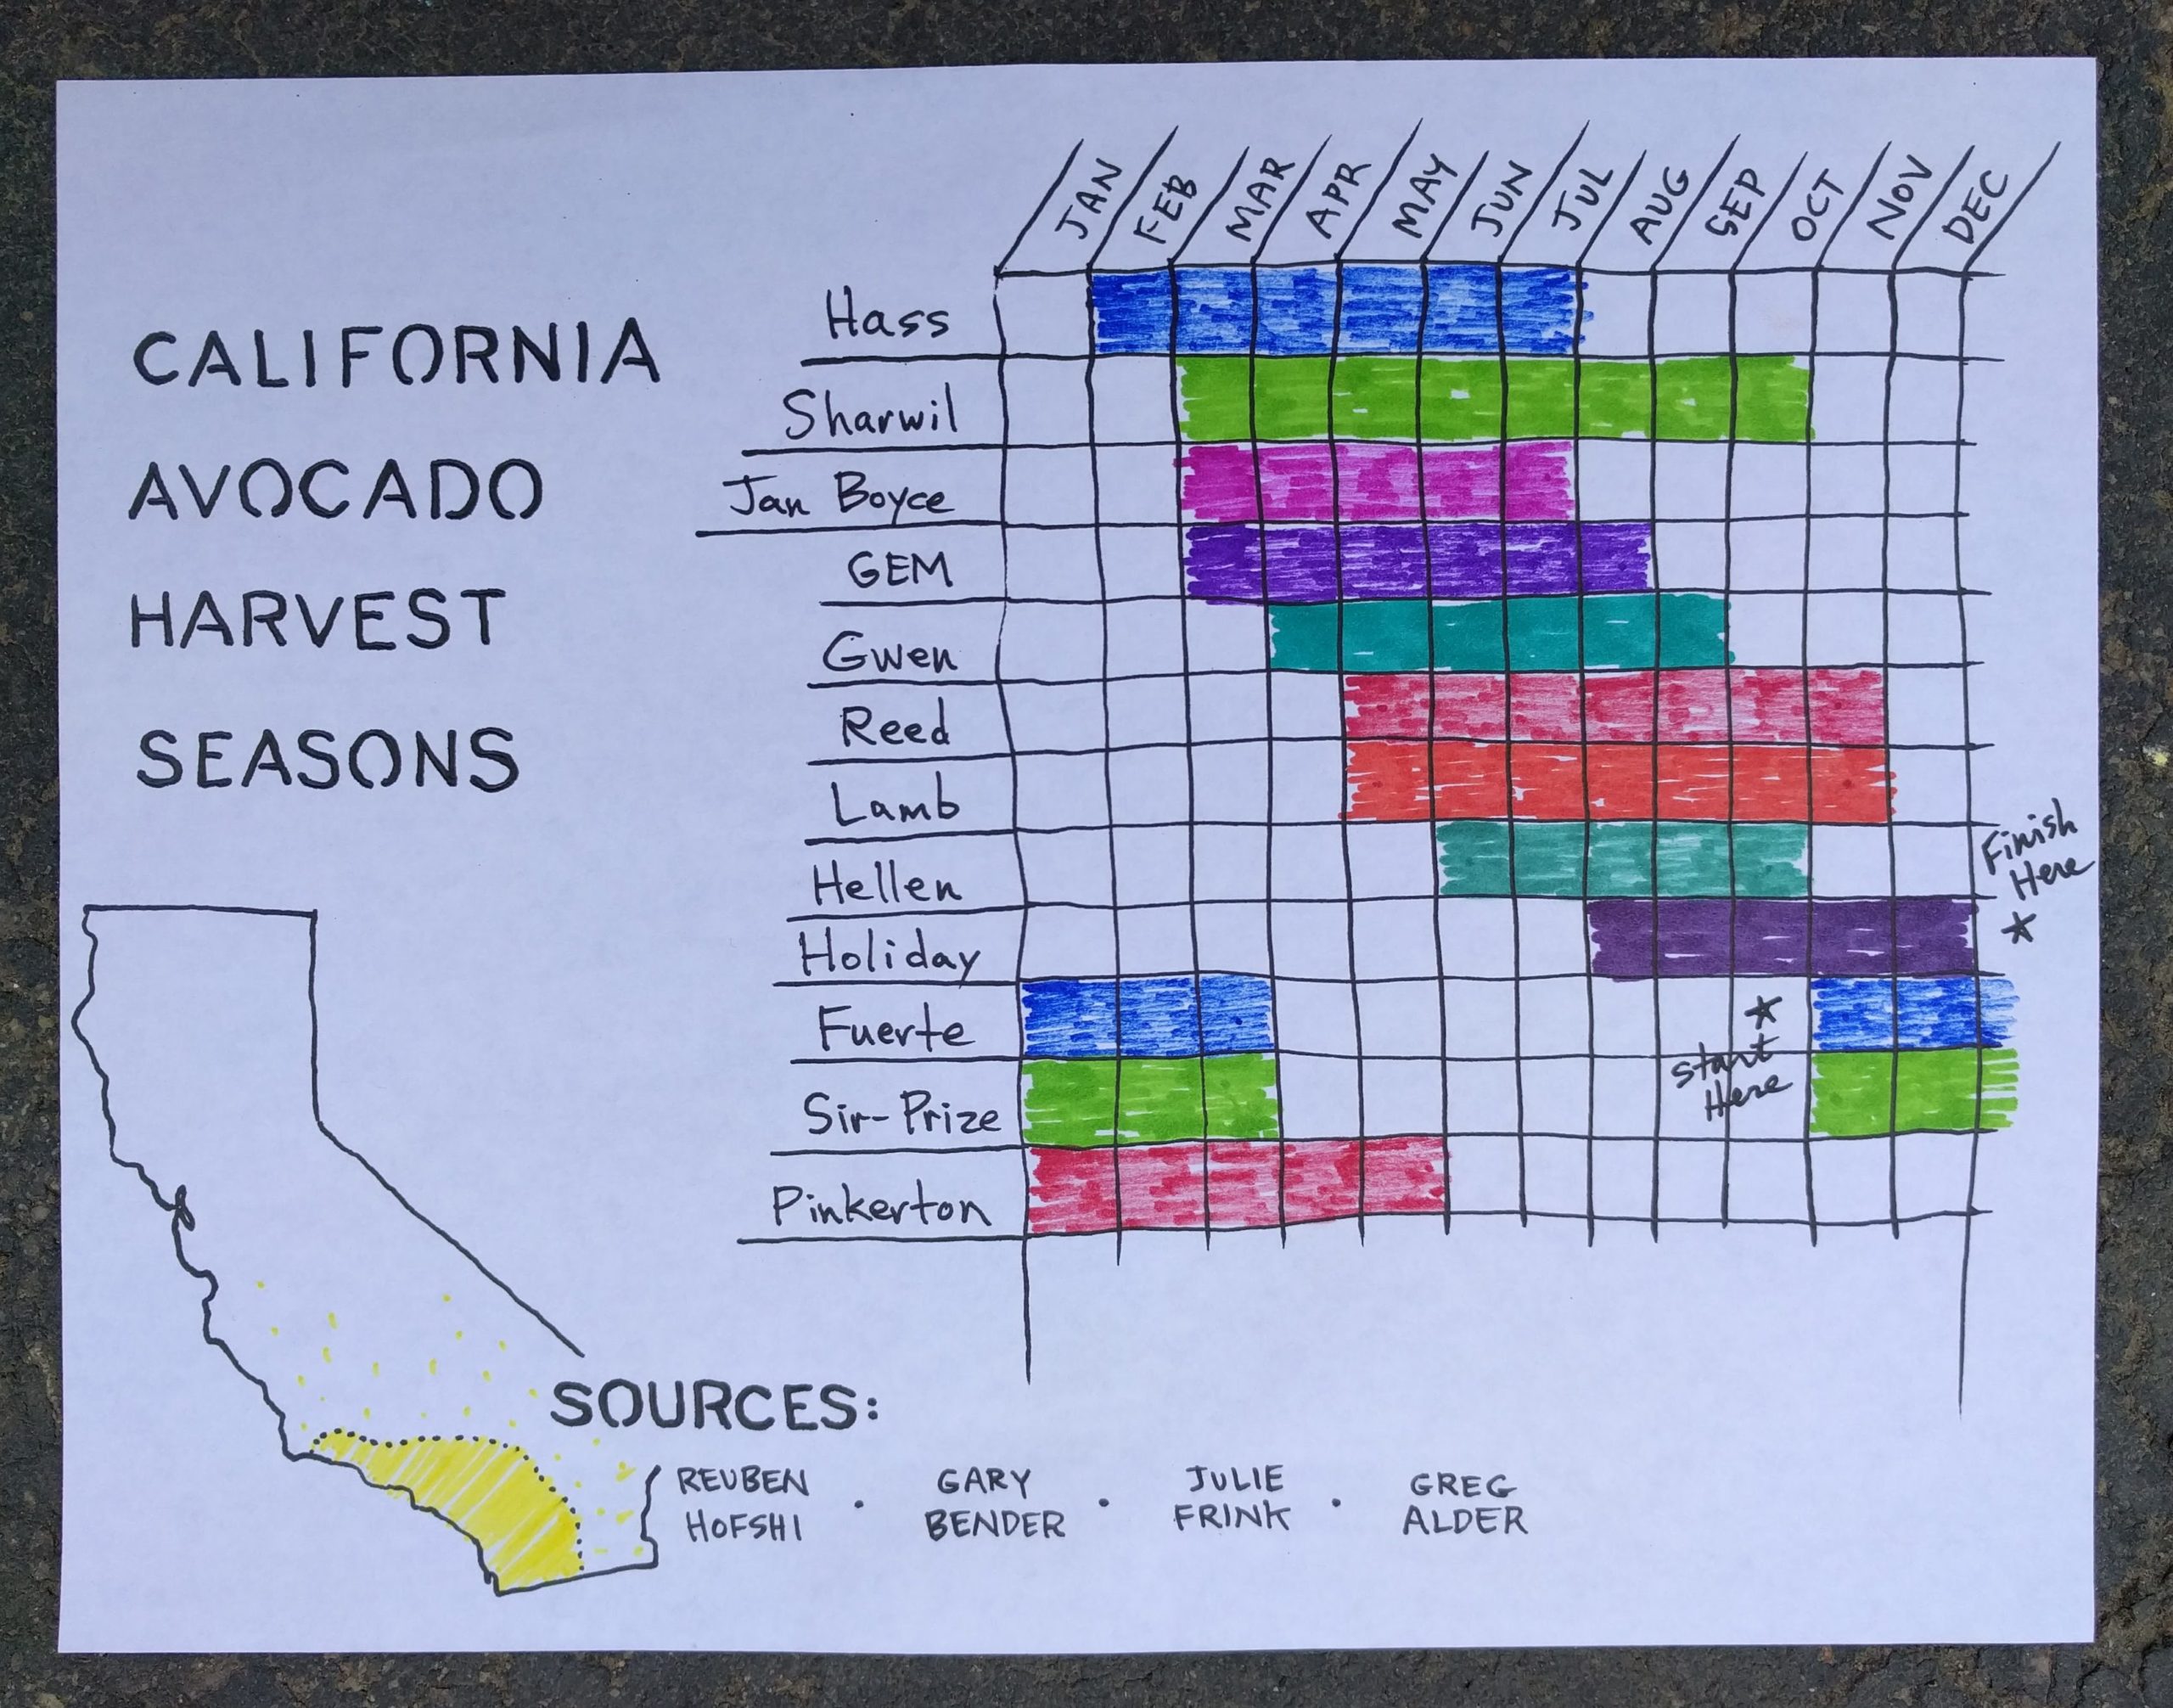 California avocado harvest chart Greg Alder #39 s Yard Posts: Food